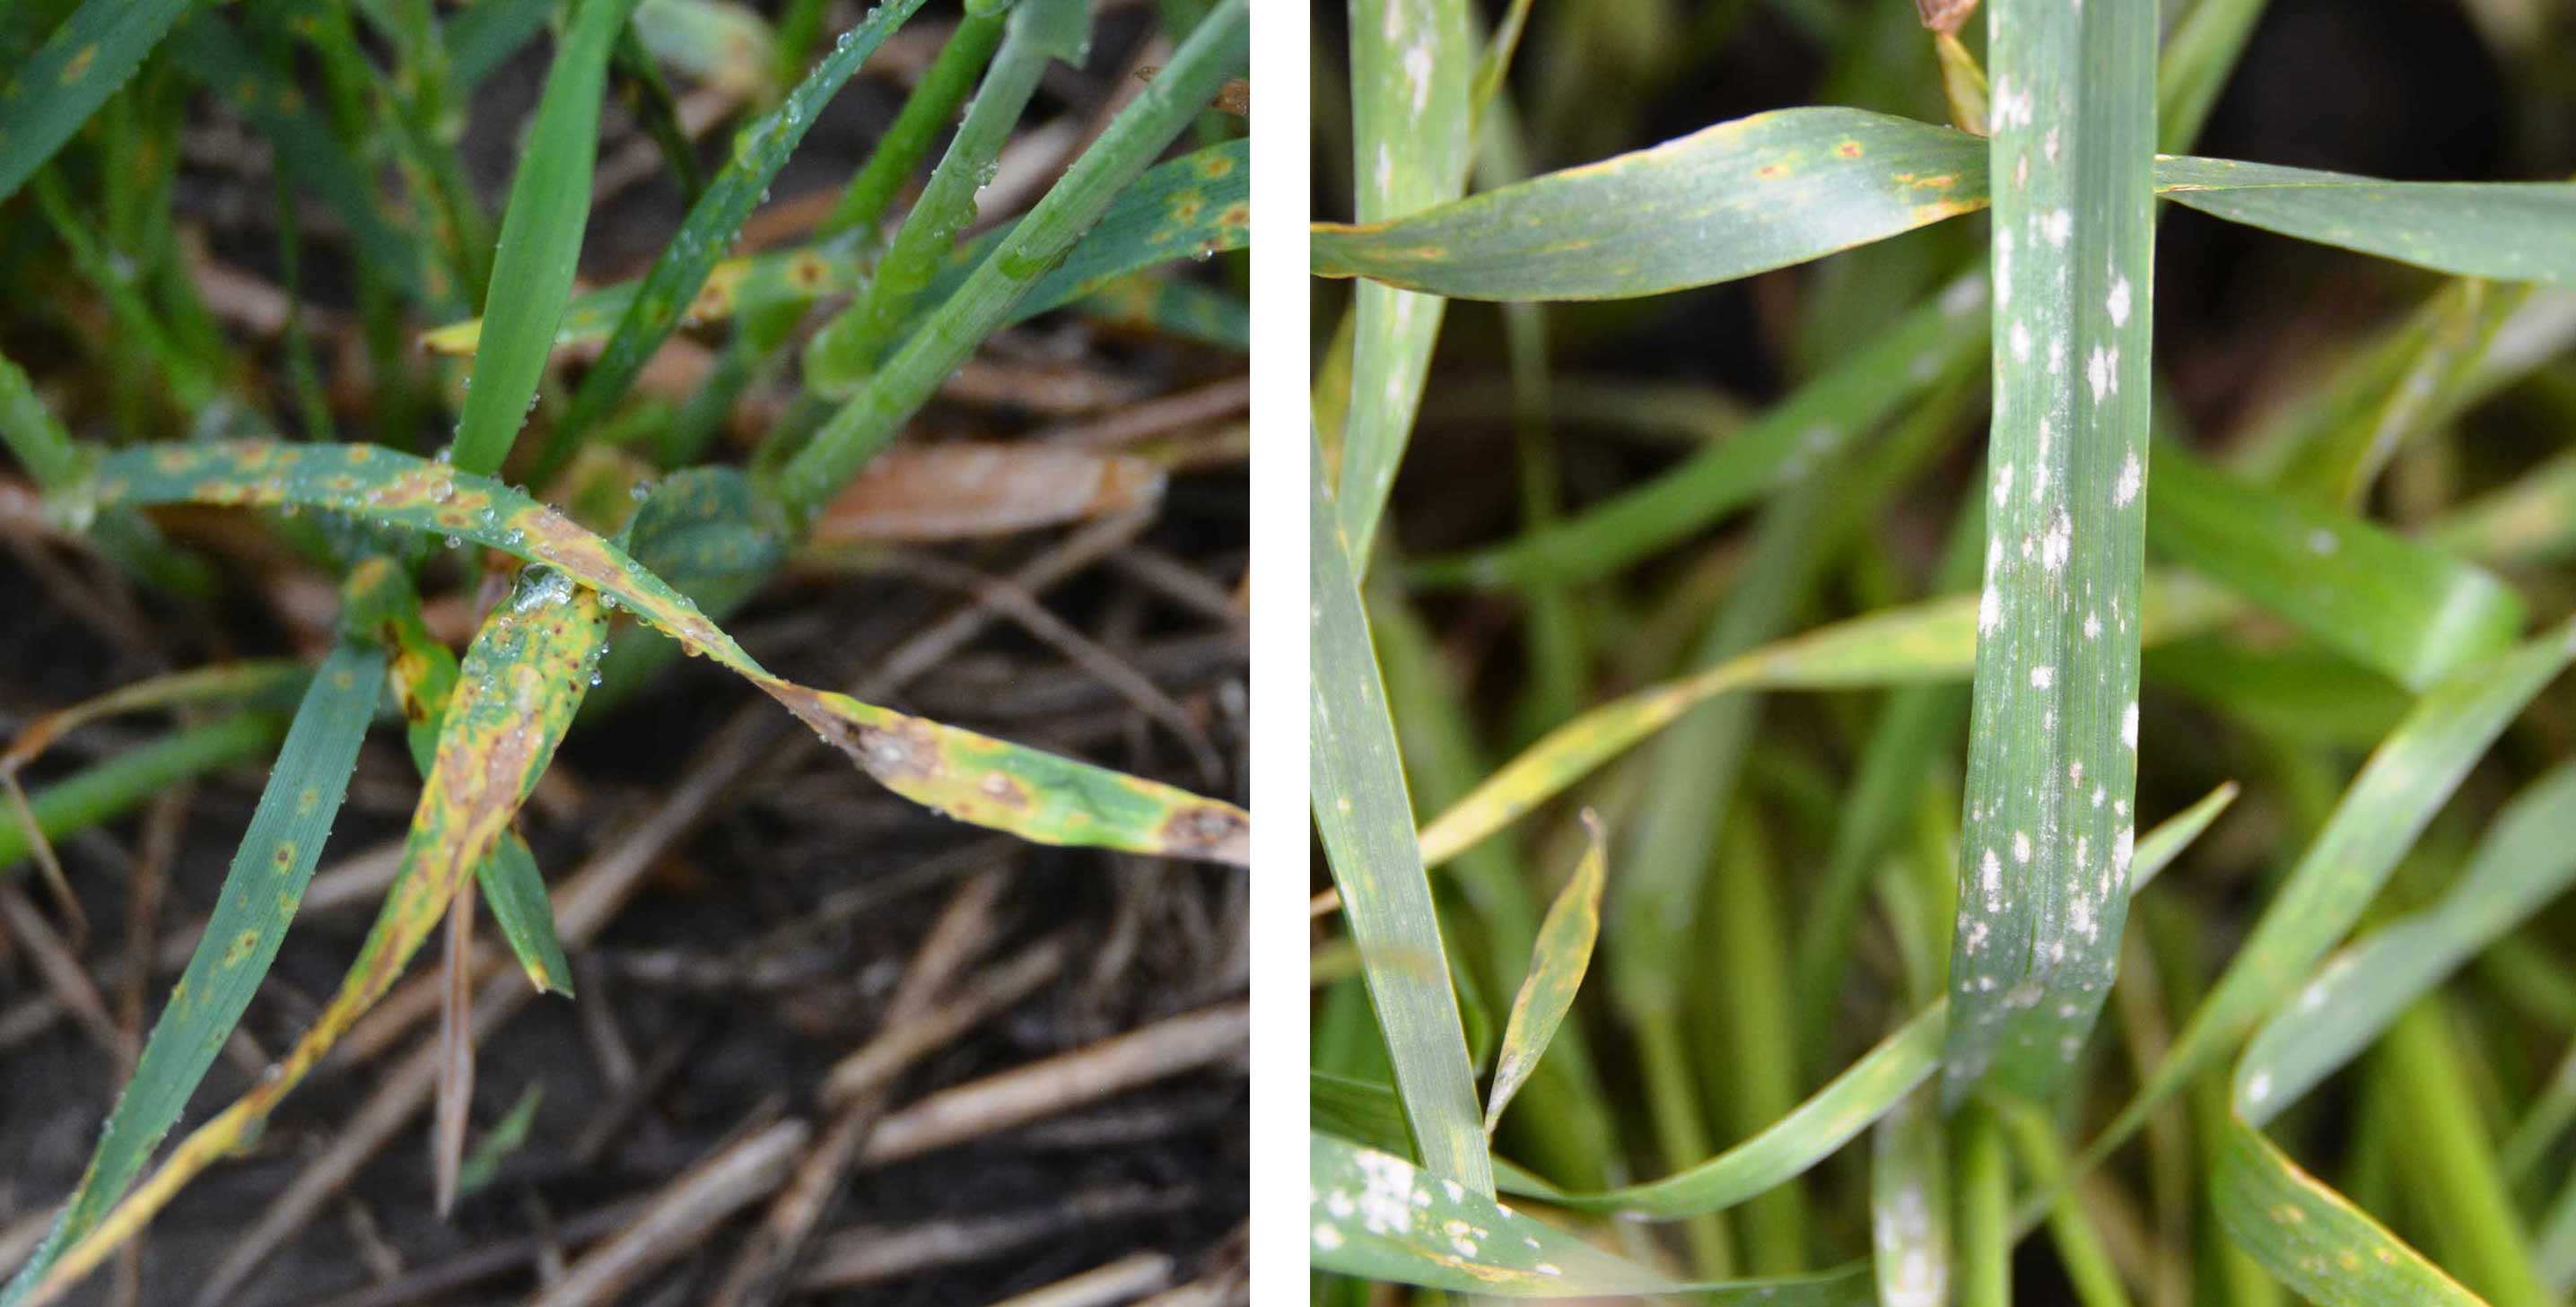 Wheat plants exhibiting symptoms of tan spot and powdery mildew.